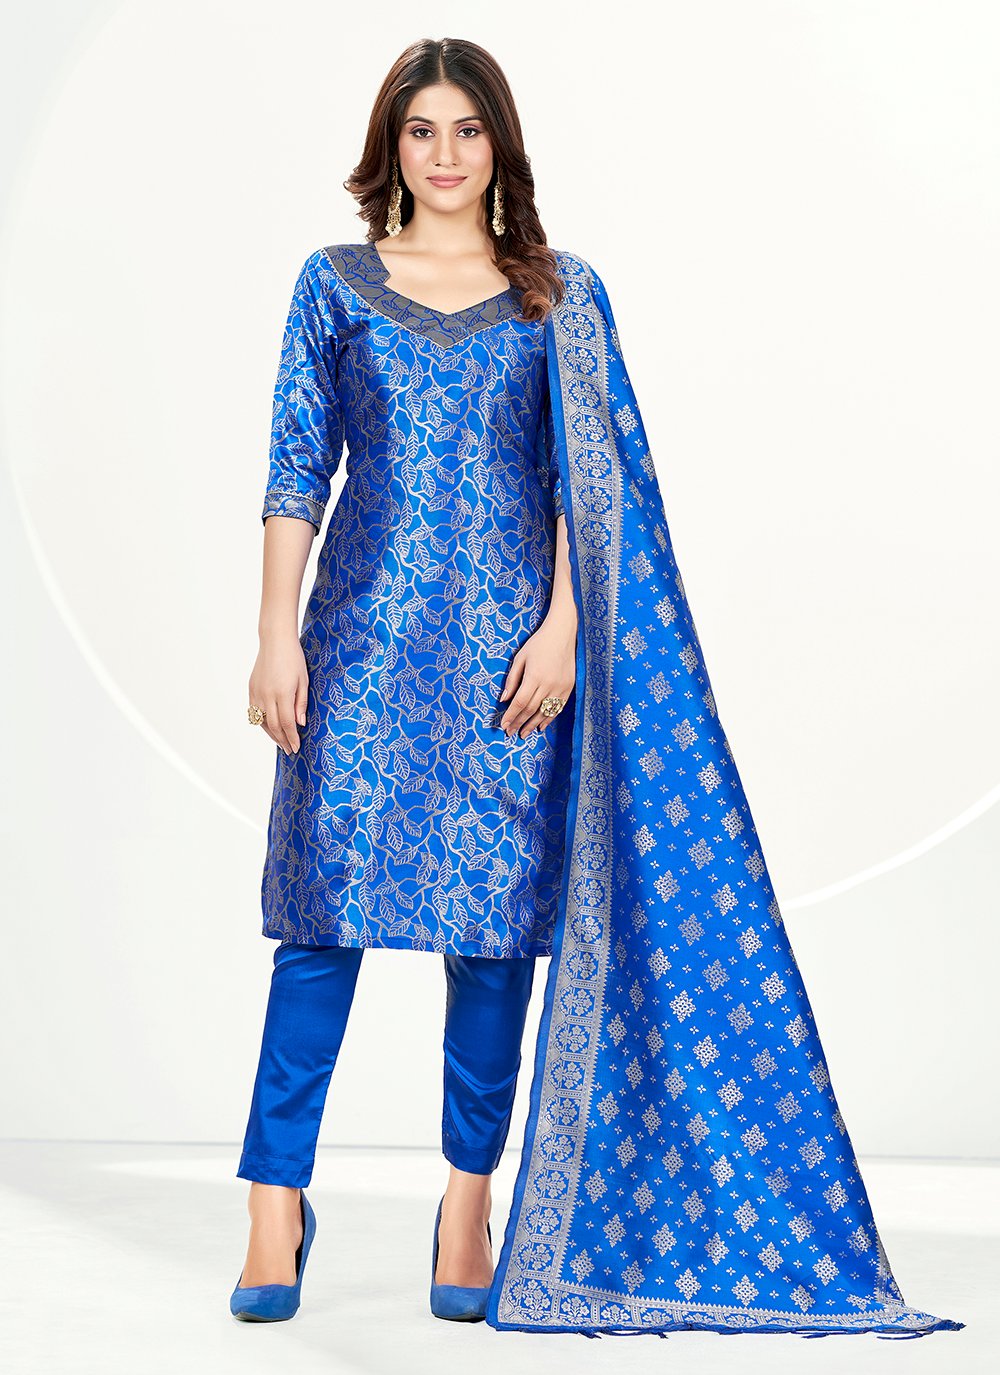 Top 30 royal💙blue punjabi suits designs #2022|#newsuits#fashionera #trend  #bluecolour#punjabisuits - YouTube